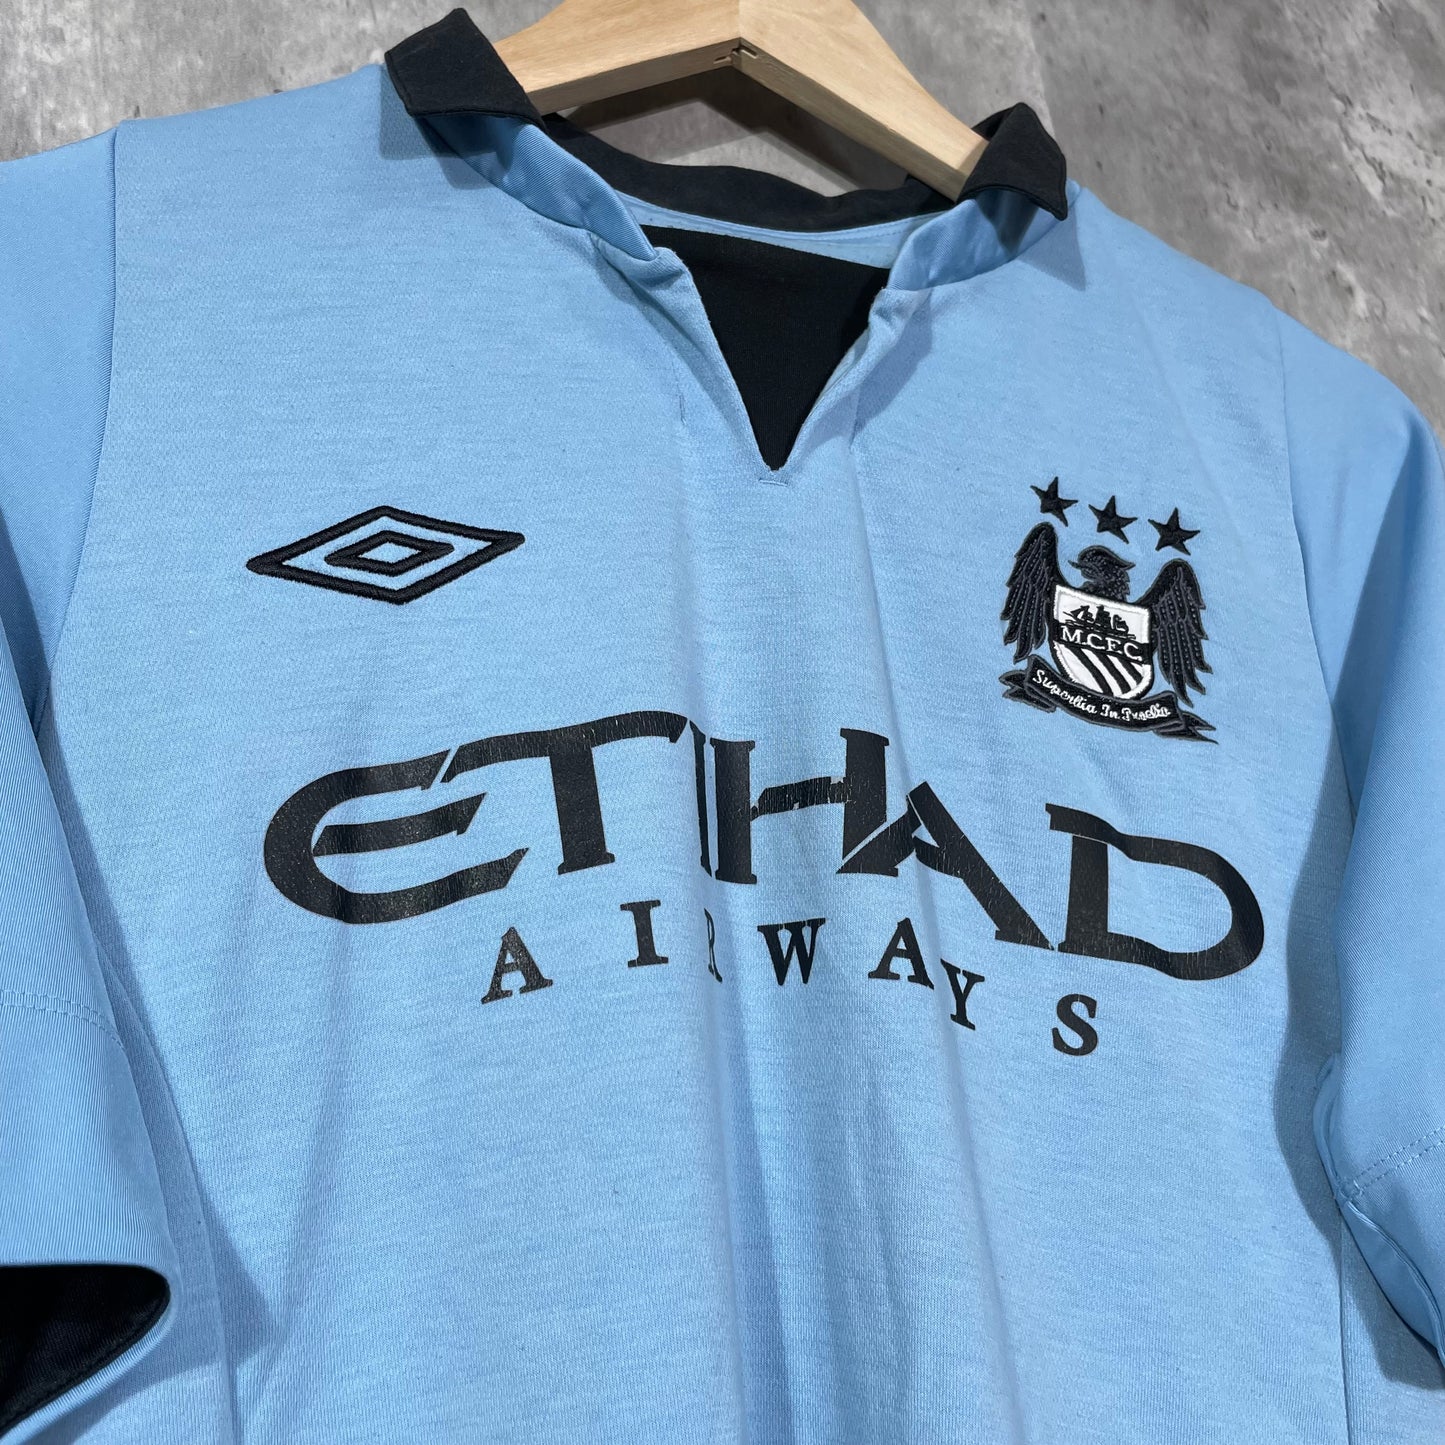 Manchester City 2012/13 Home Shirt - Medium